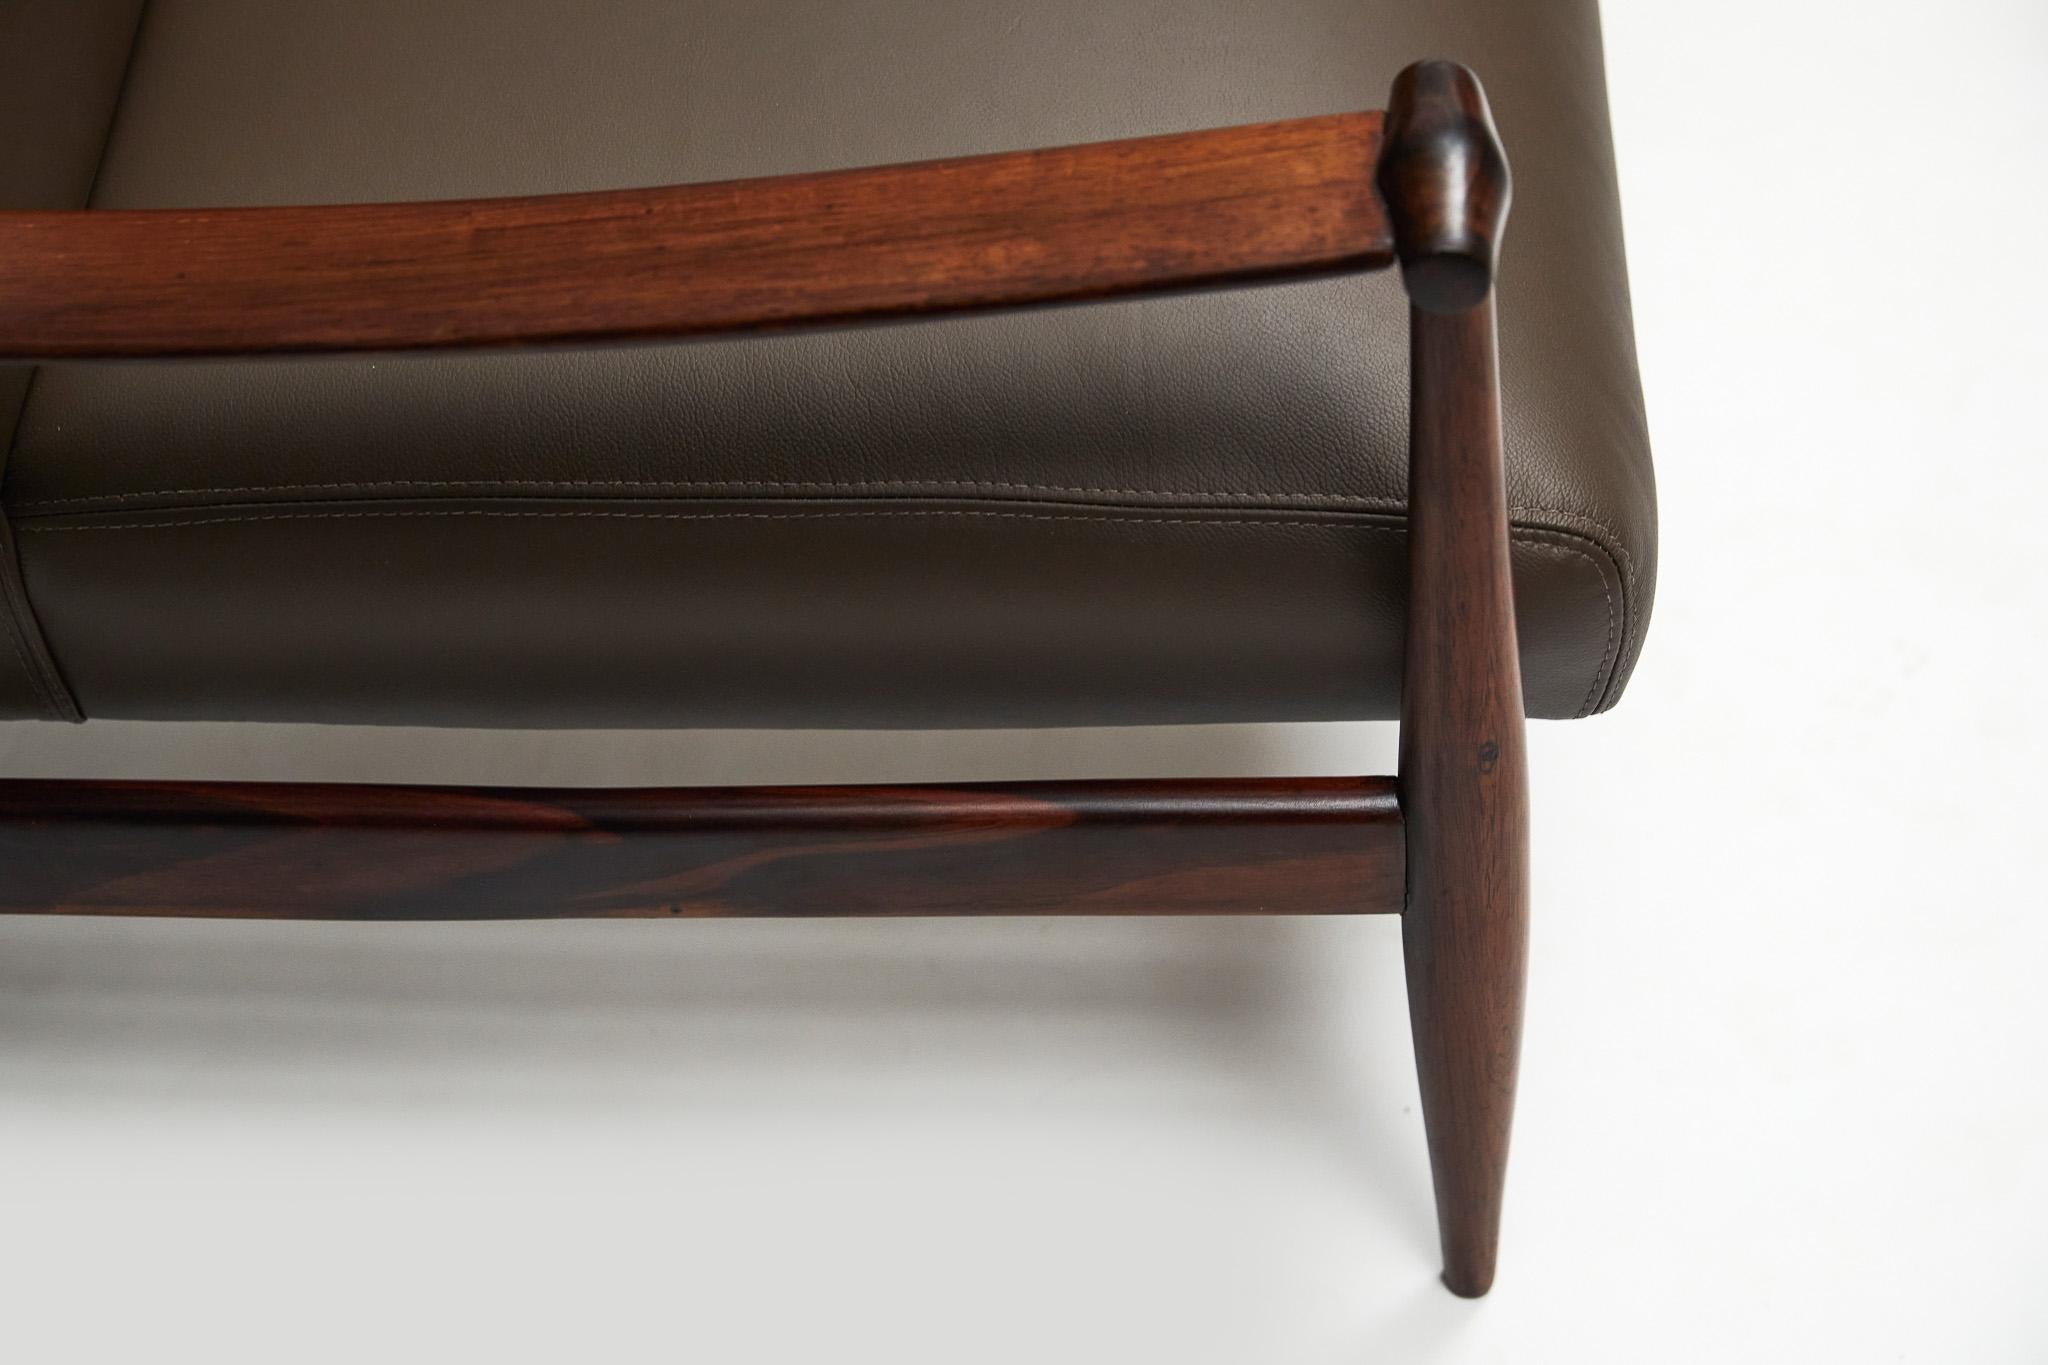 Brazilian Modern Sofa in Hardwood & Brown Leather by Liceu De Artes 1960 For Sale 5